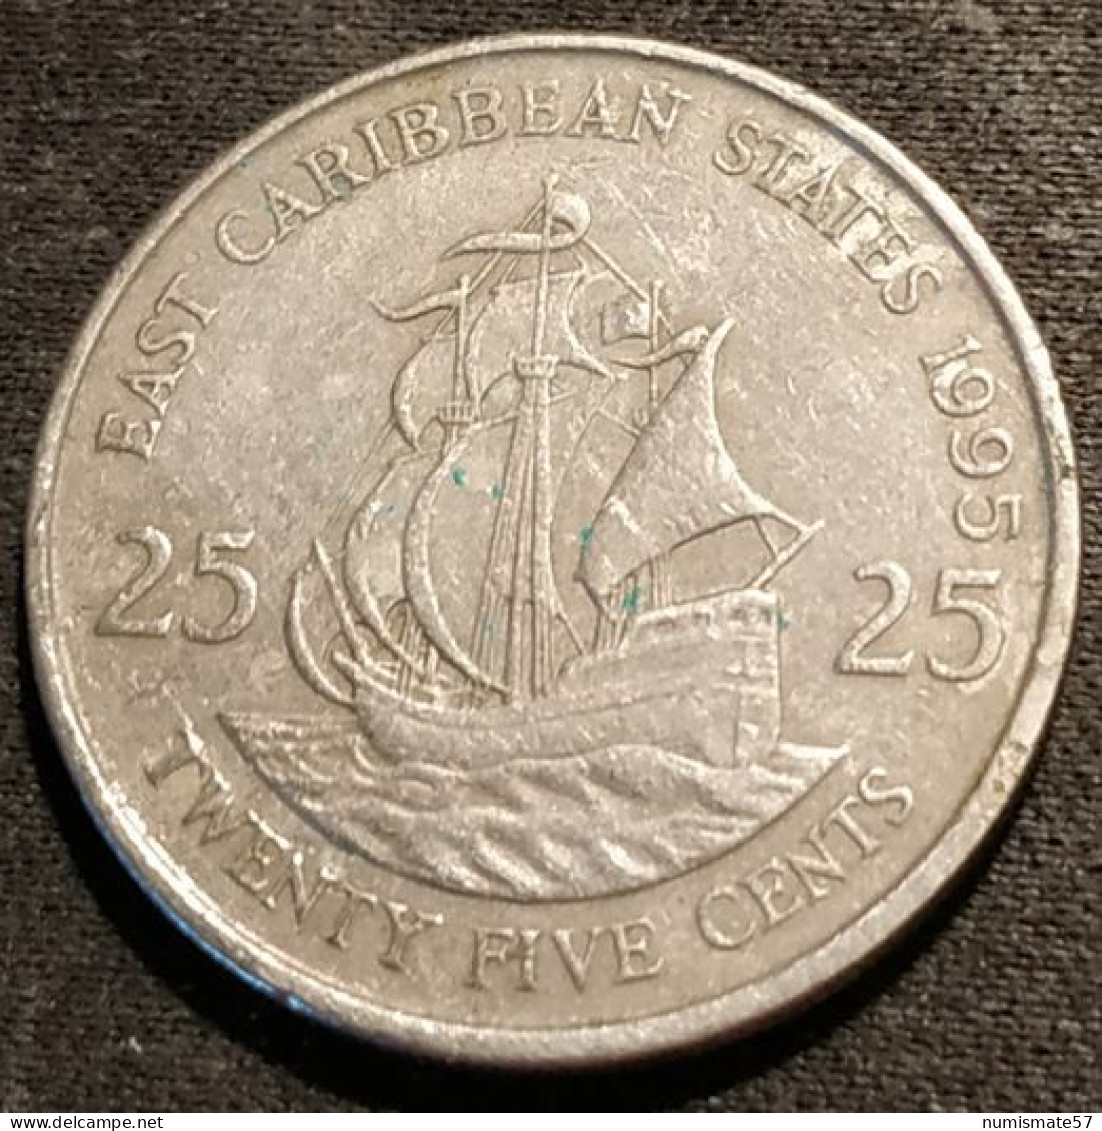 EAST CARIBBEAN STATES - 25 CENTS 1995 - Elizabeth II - 2e Effigie - KM 14 - ( Caraibes ) - Caraibi Orientali (Stati Dei)